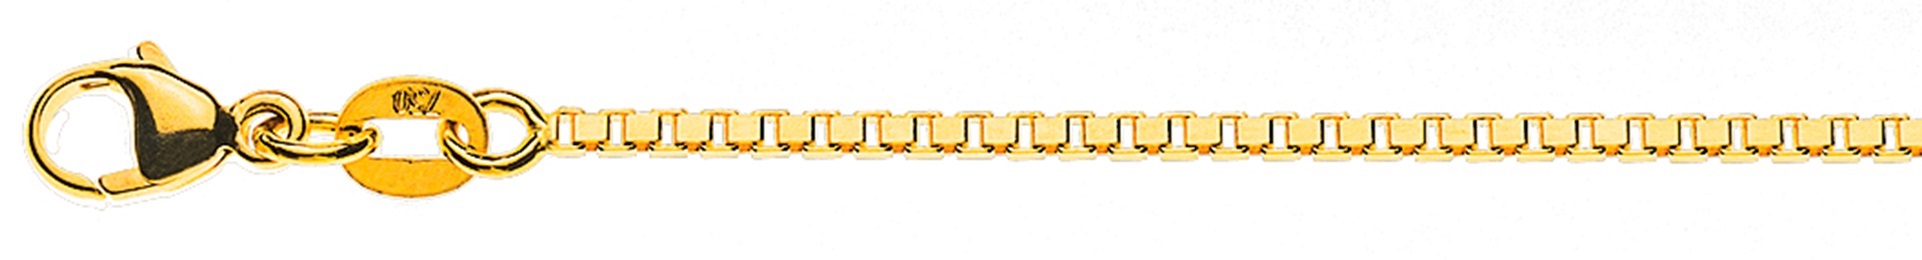 AURONOS Style Necklace yellow gold 9K Venetian chain diamond cut 38cm 1.4mm